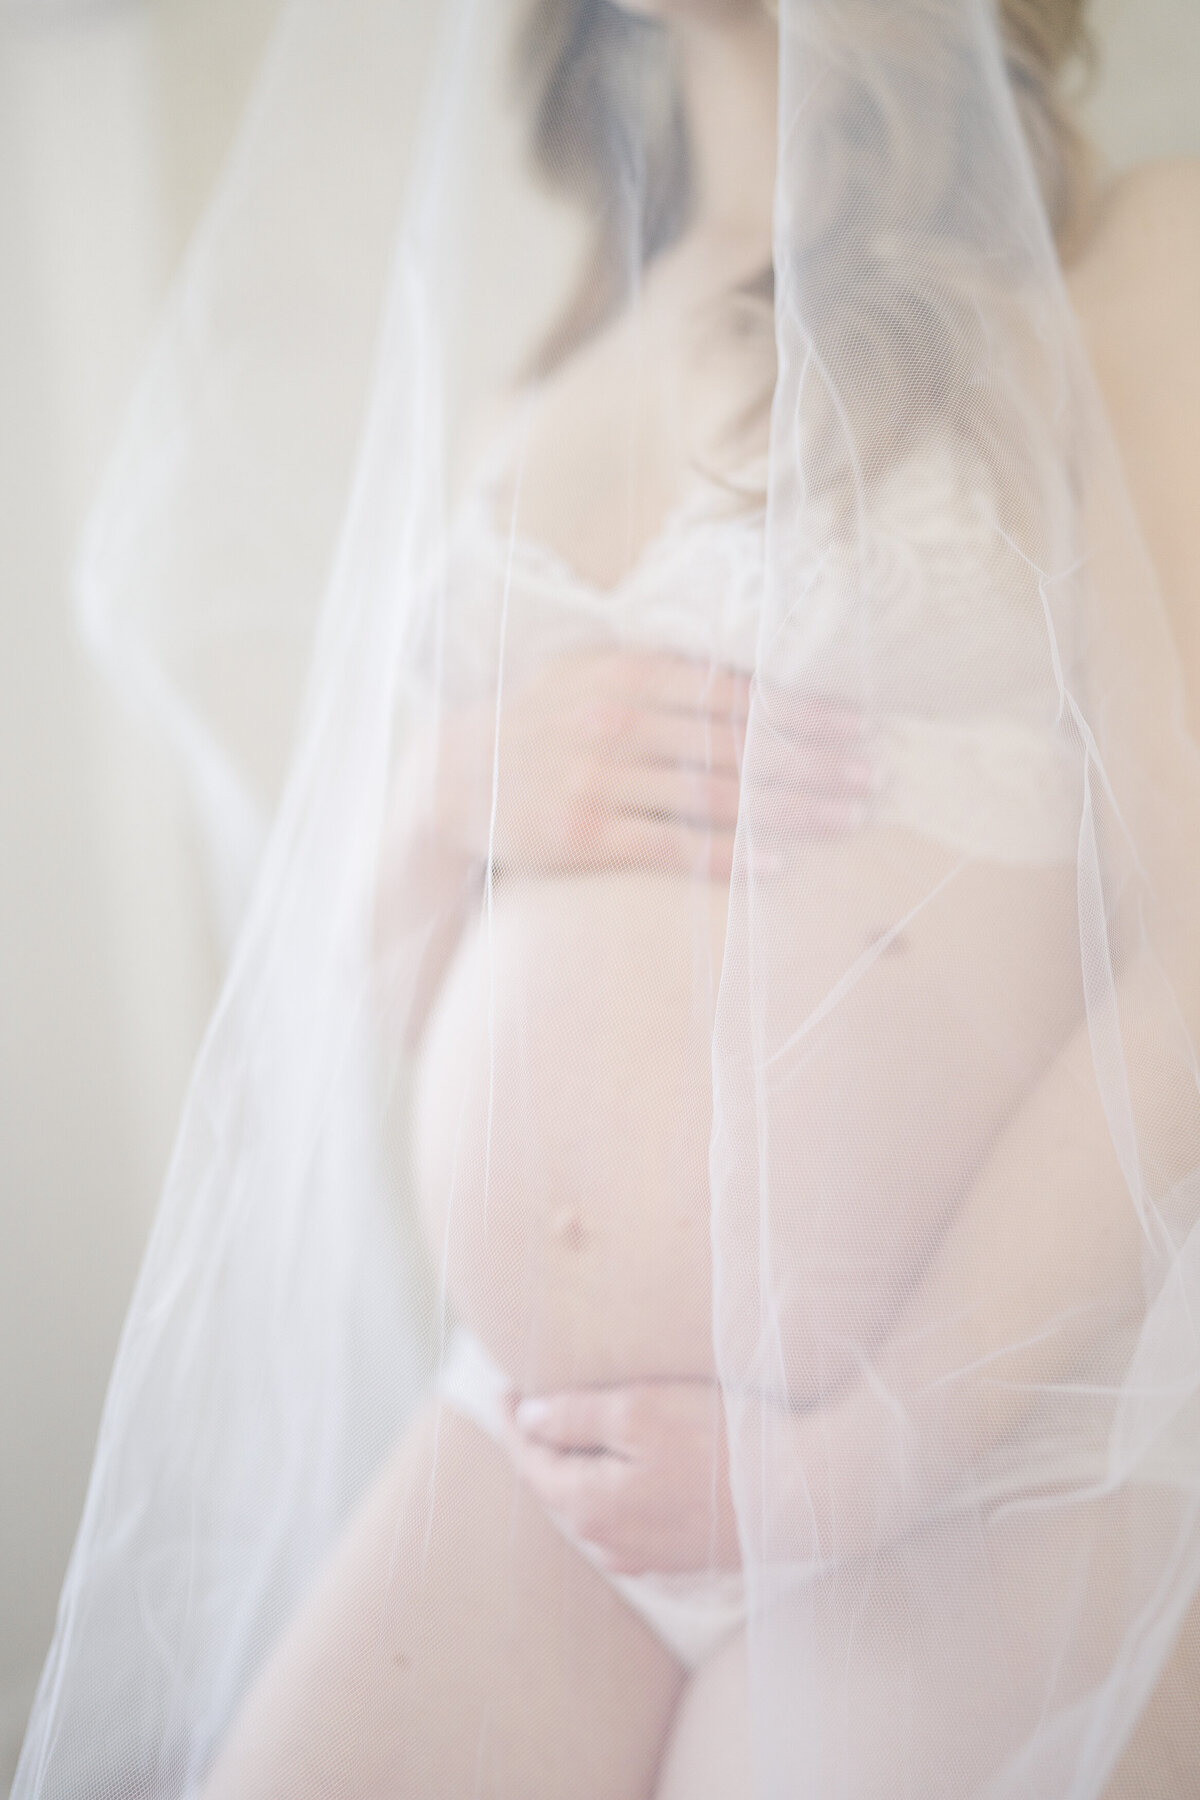 Courtney-Landrum-Photography-Studi-Maternity-web-33